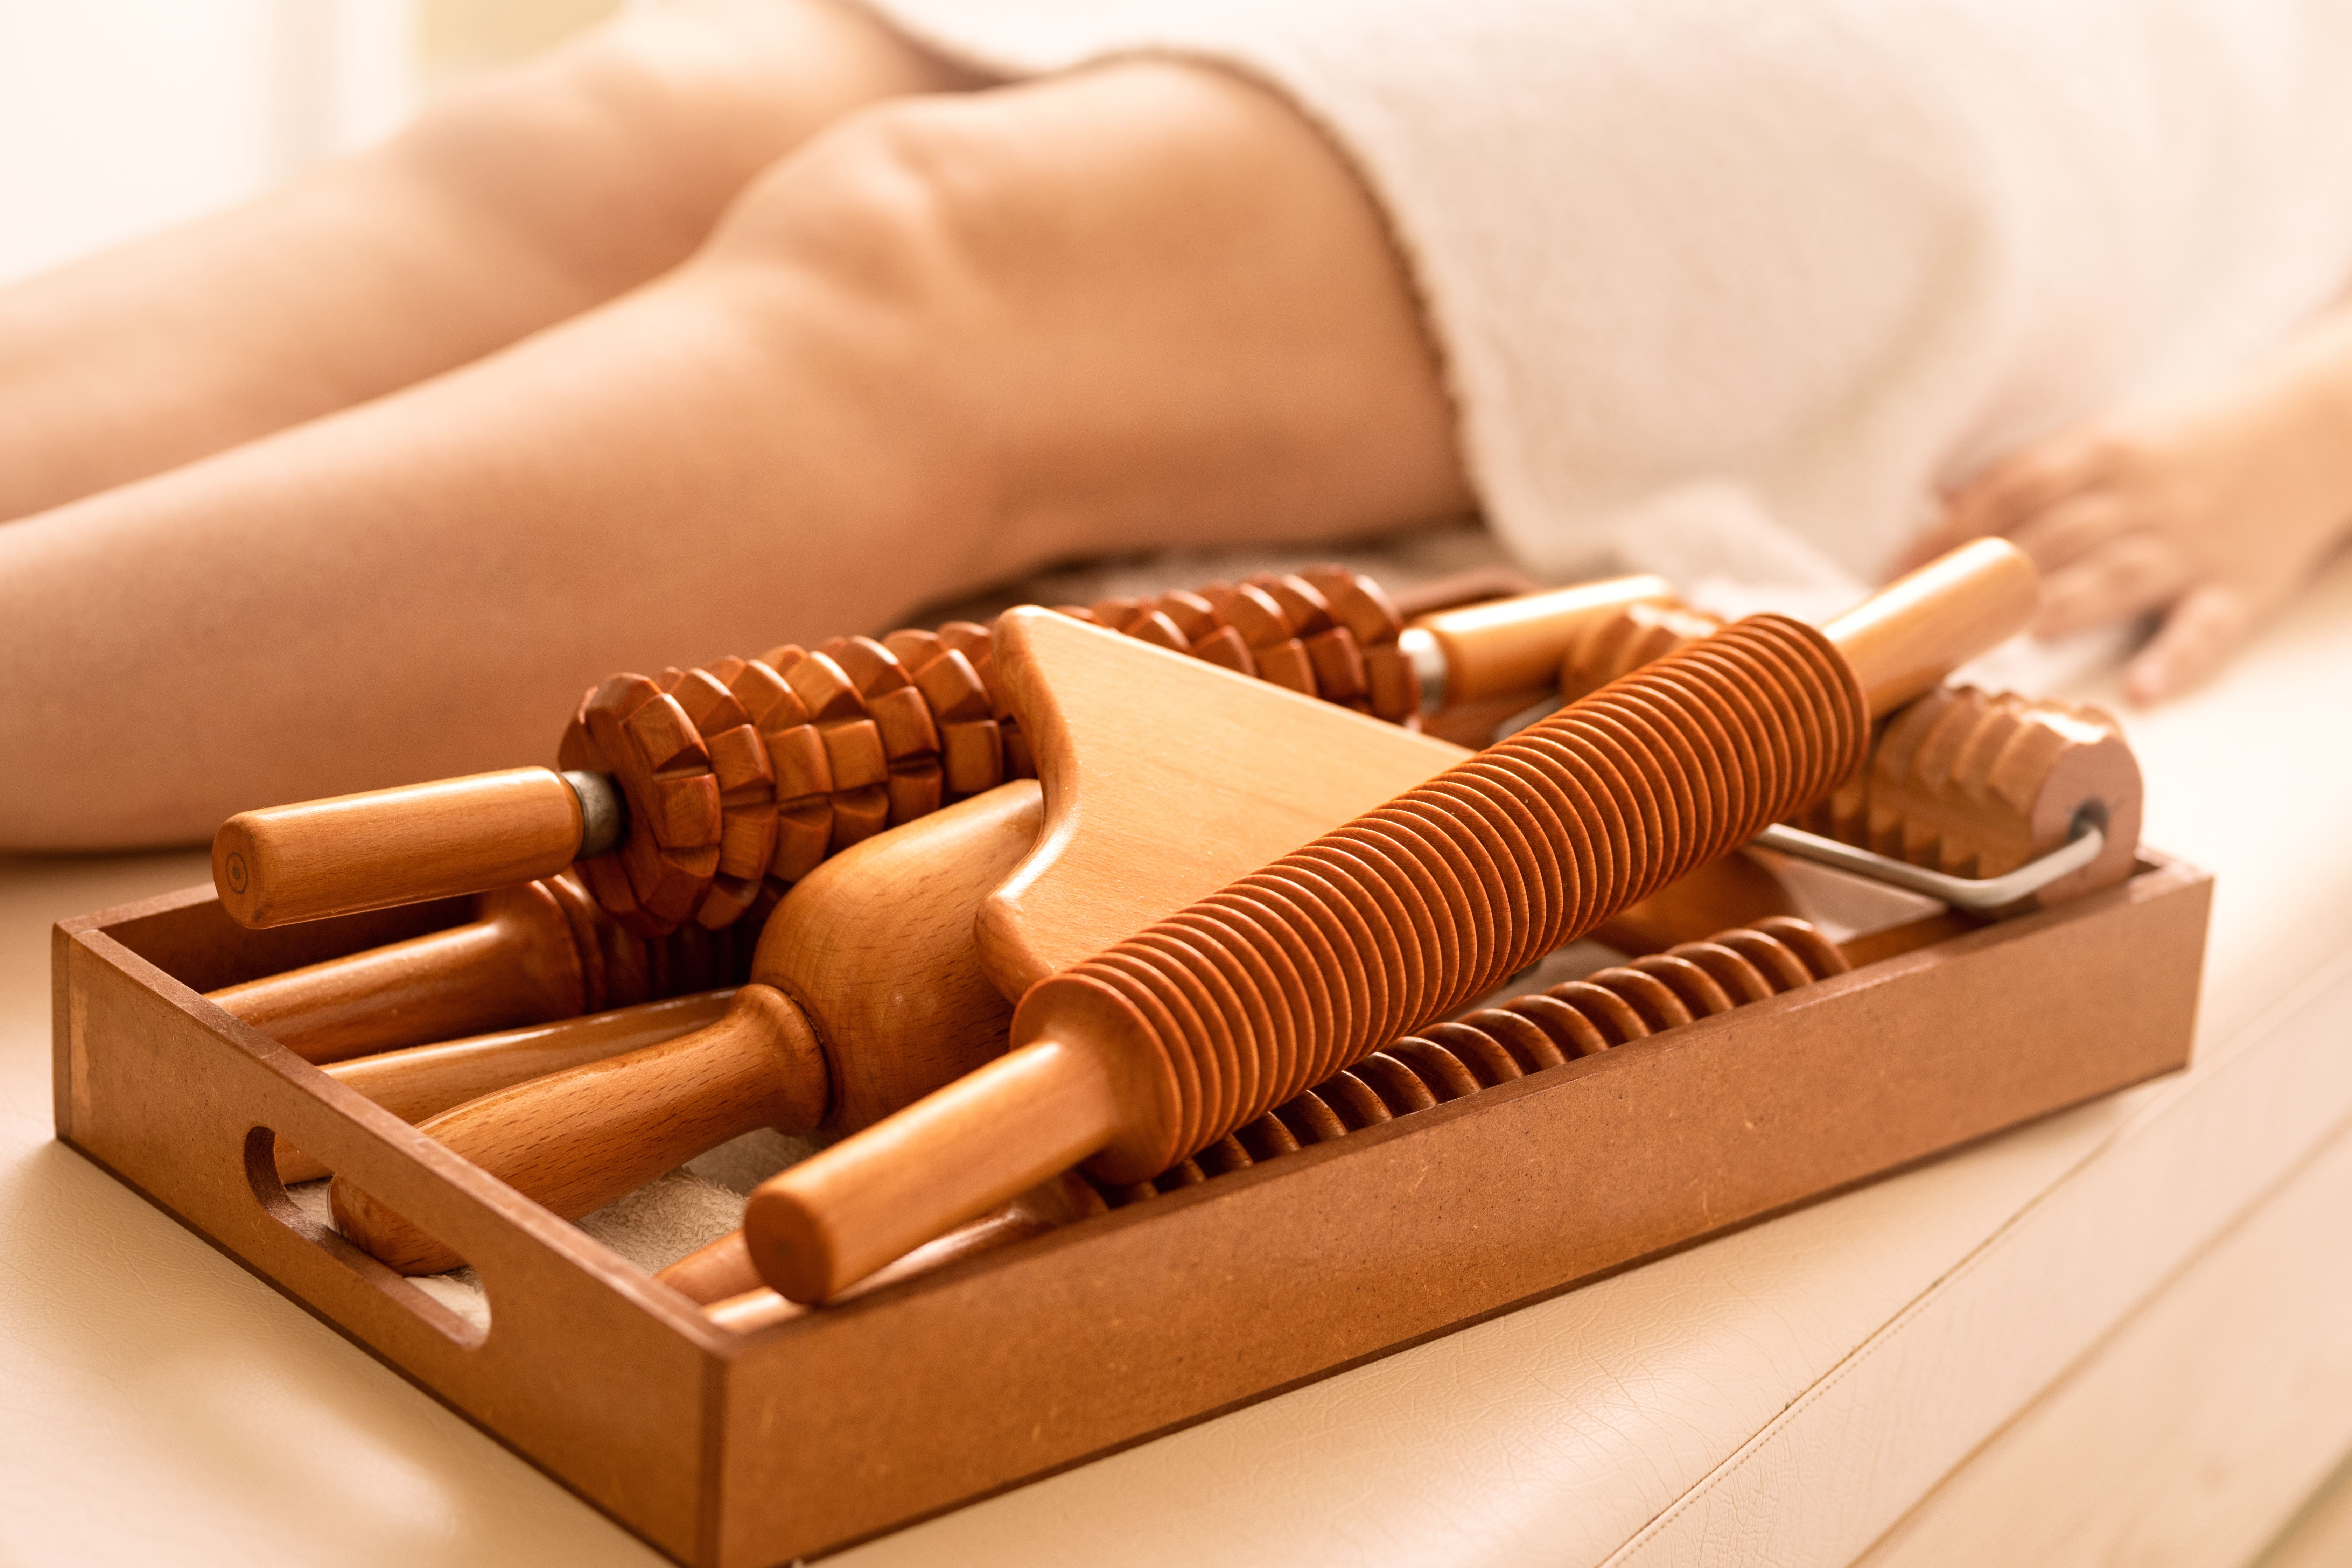 Massage madérothérapie - Sophrologue Sophie Kepper Bobbia - Bourgoin-Jallieu